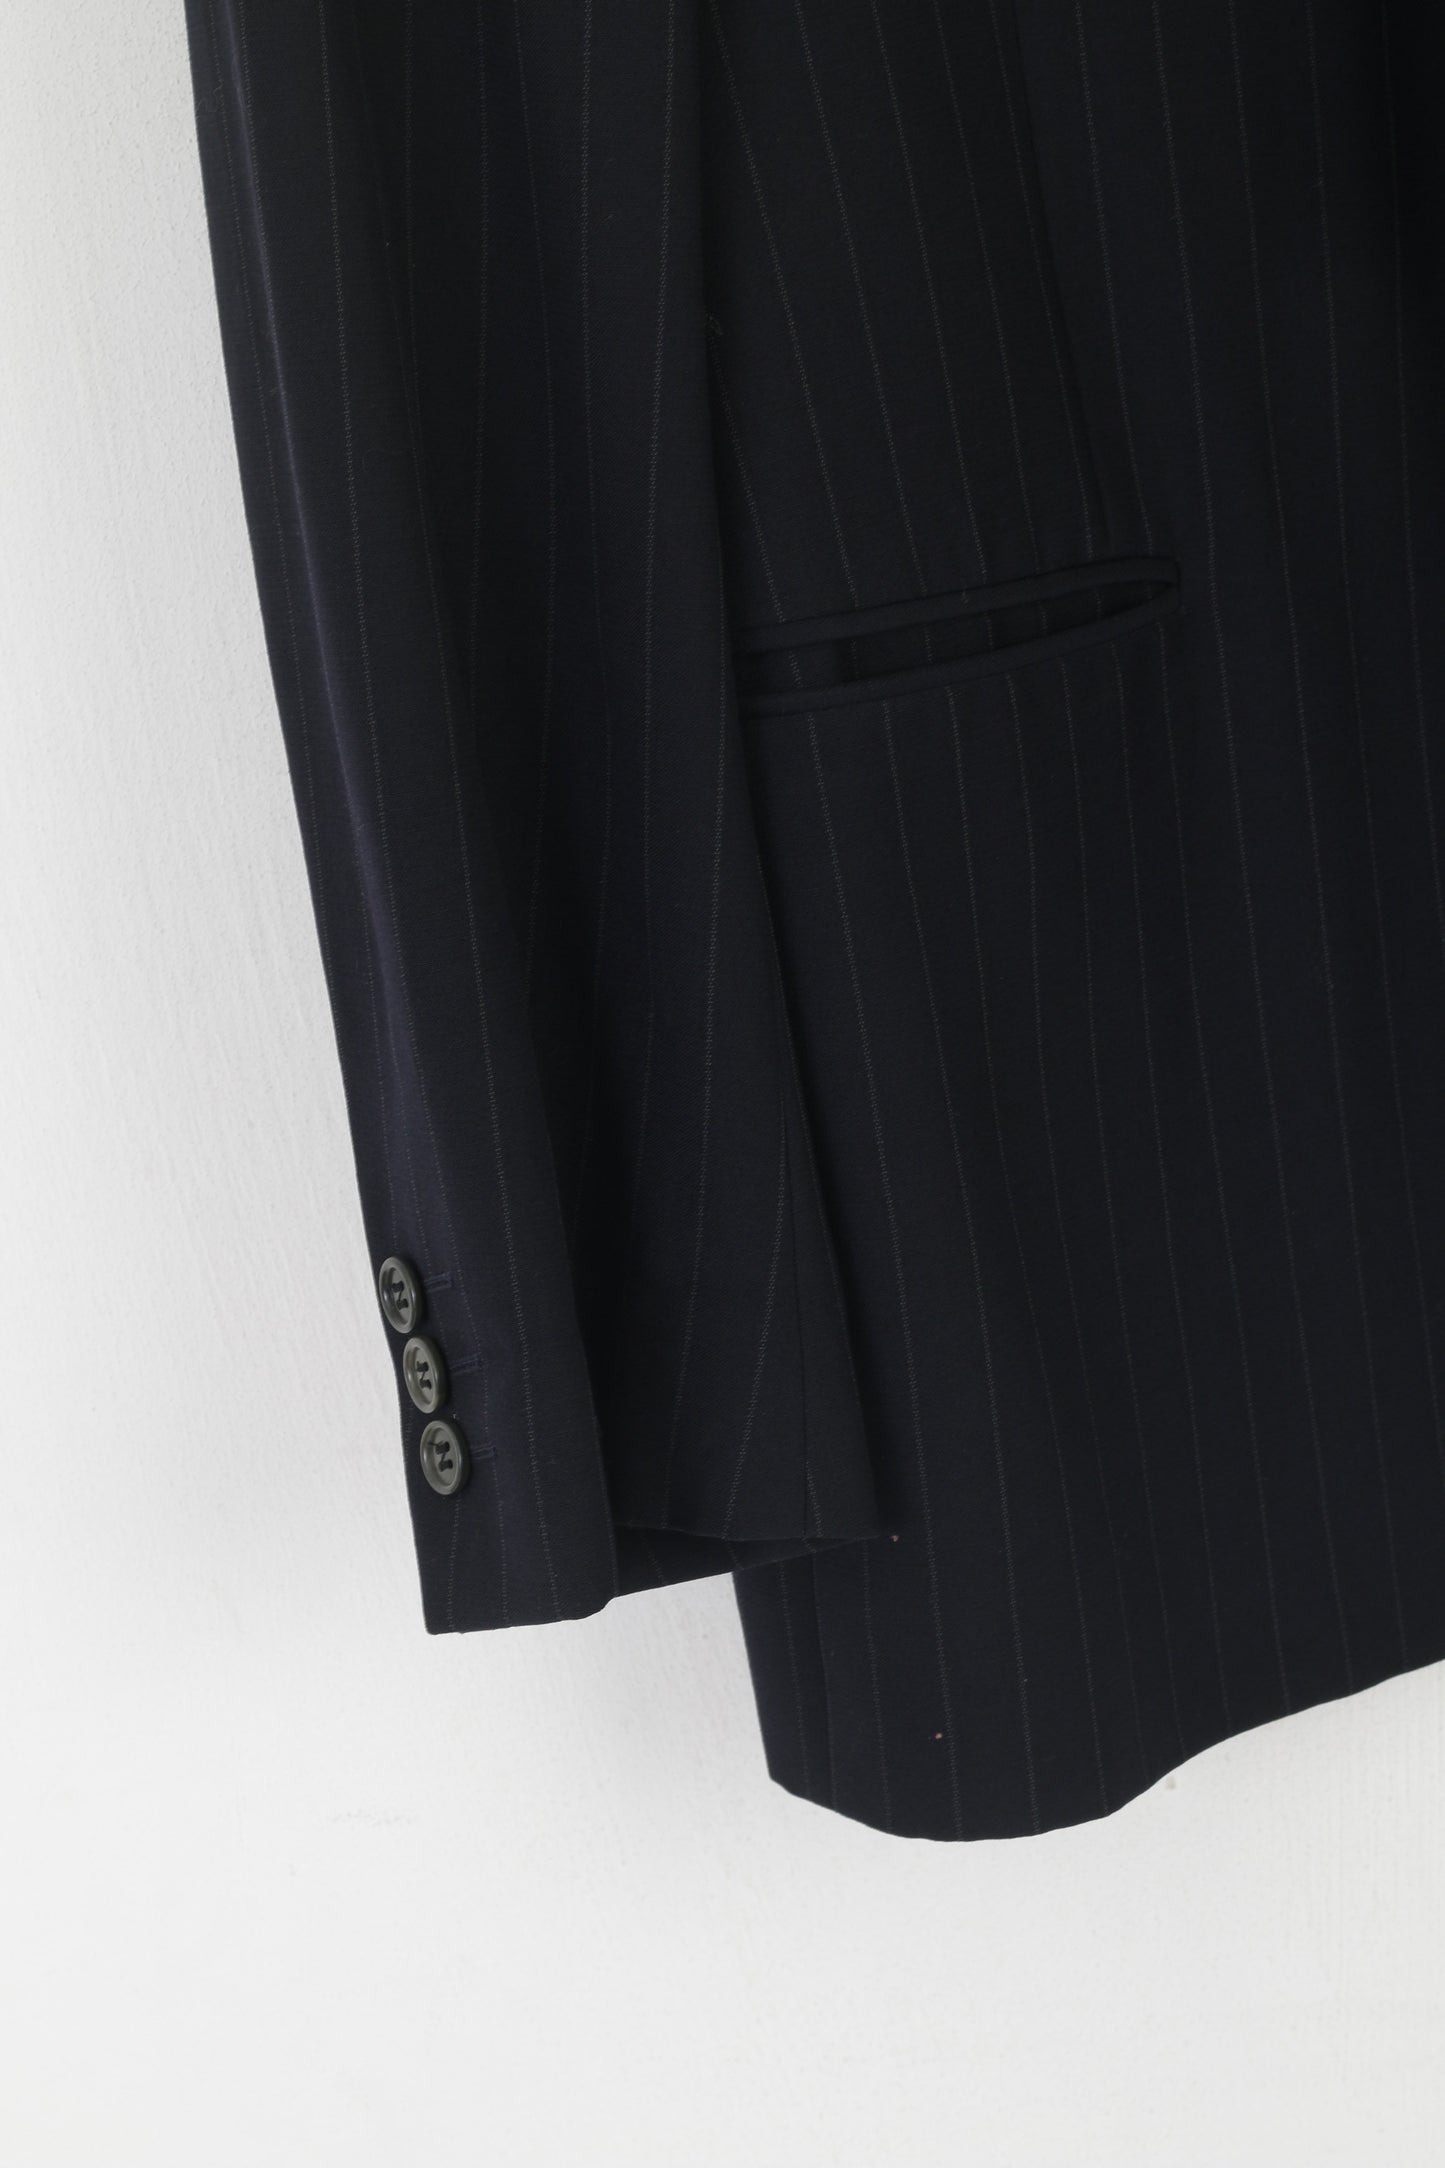 Nino Danieli Men 50 40 Blazer Navy Striped Wool Made in Italy Single Breasted Jacket